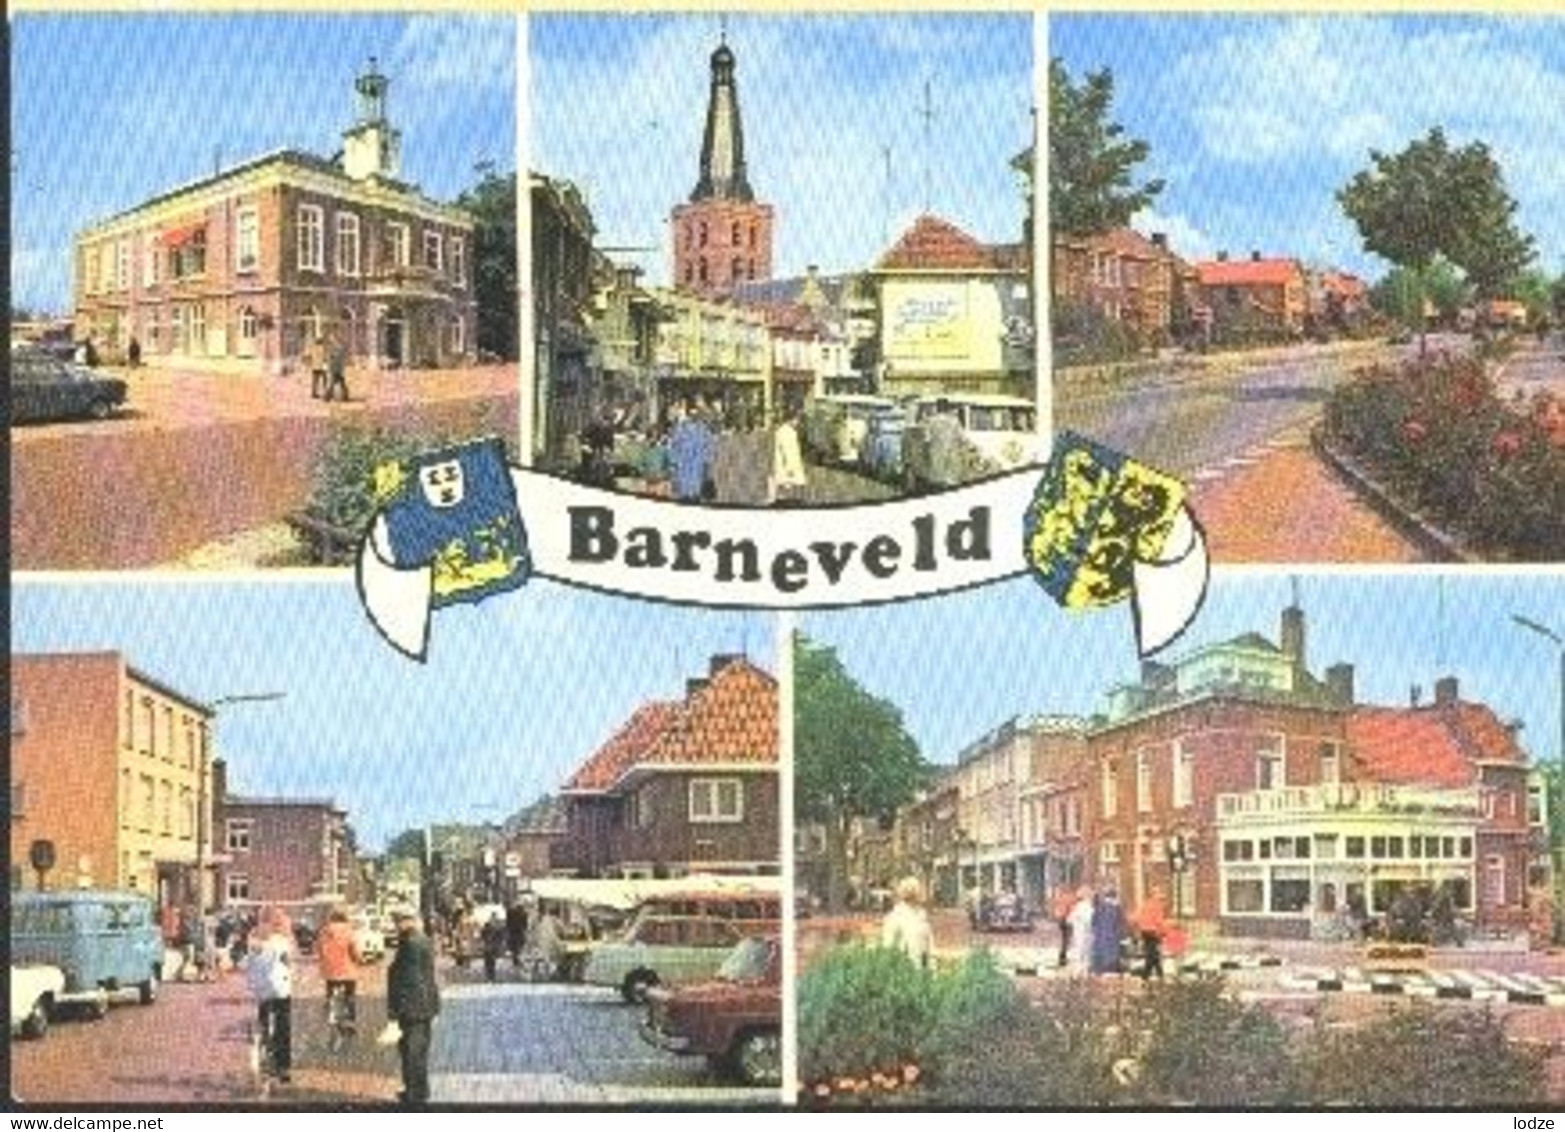 Nederland Holland Pays Bas Barneveld Nieuwstraat - Barneveld